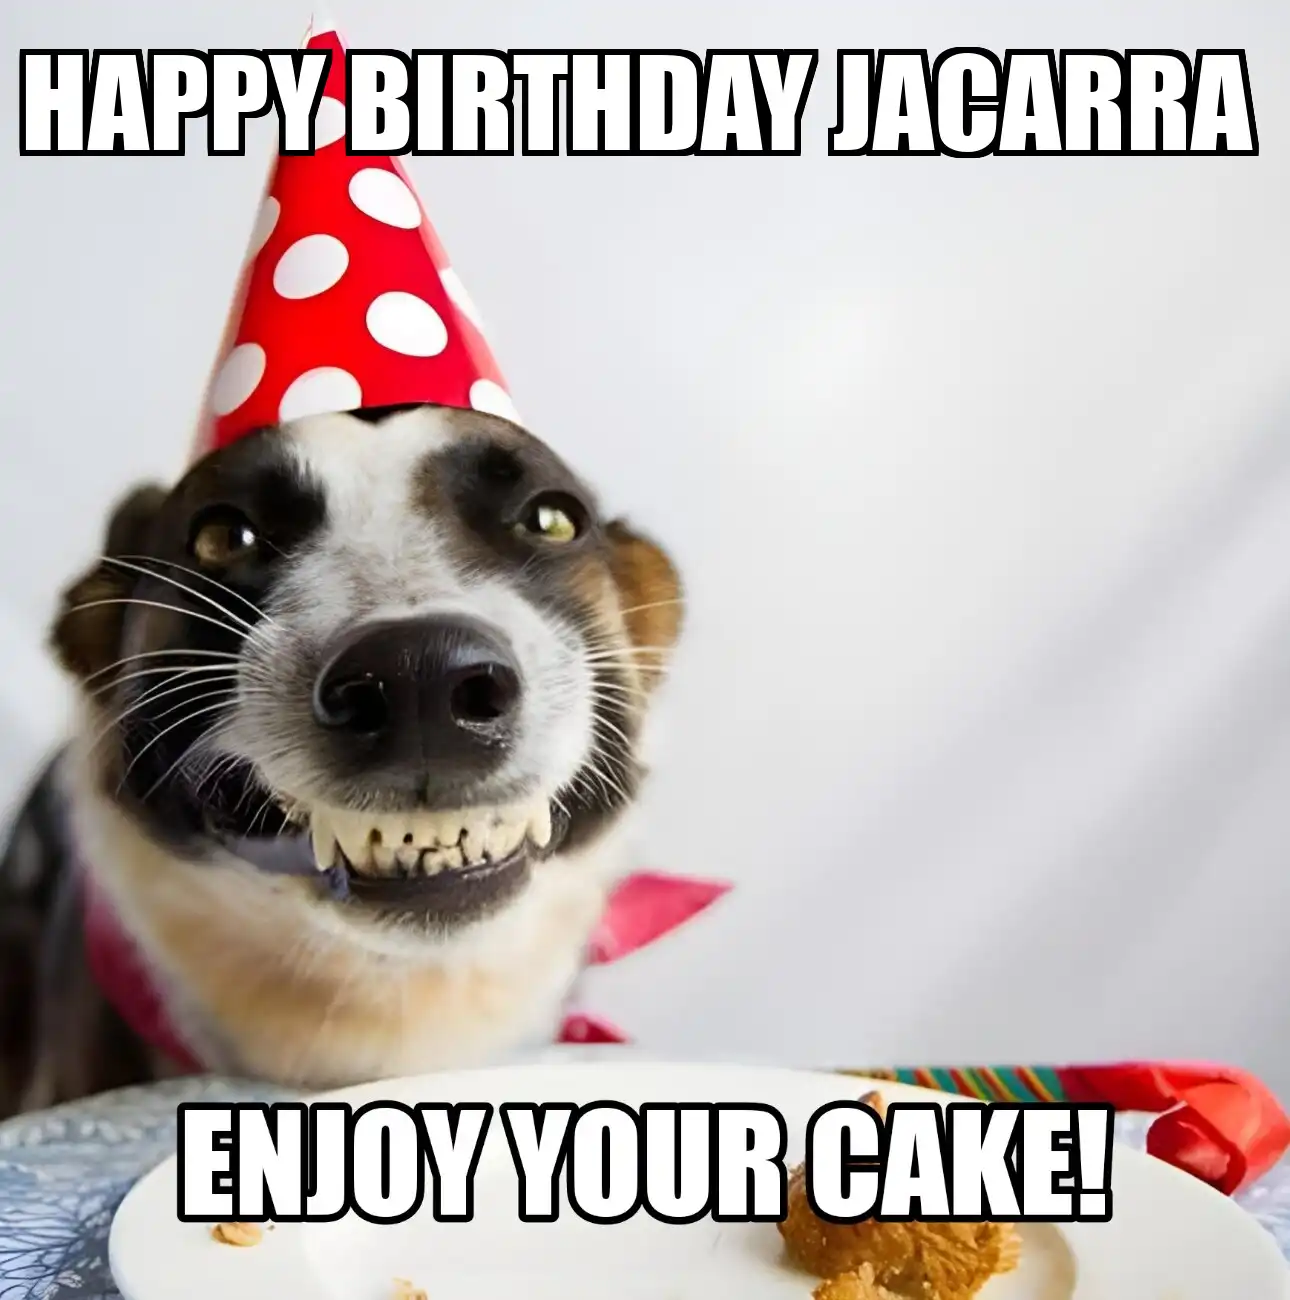 Happy Birthday Jacarra Enjoy Your Cake Dog Meme